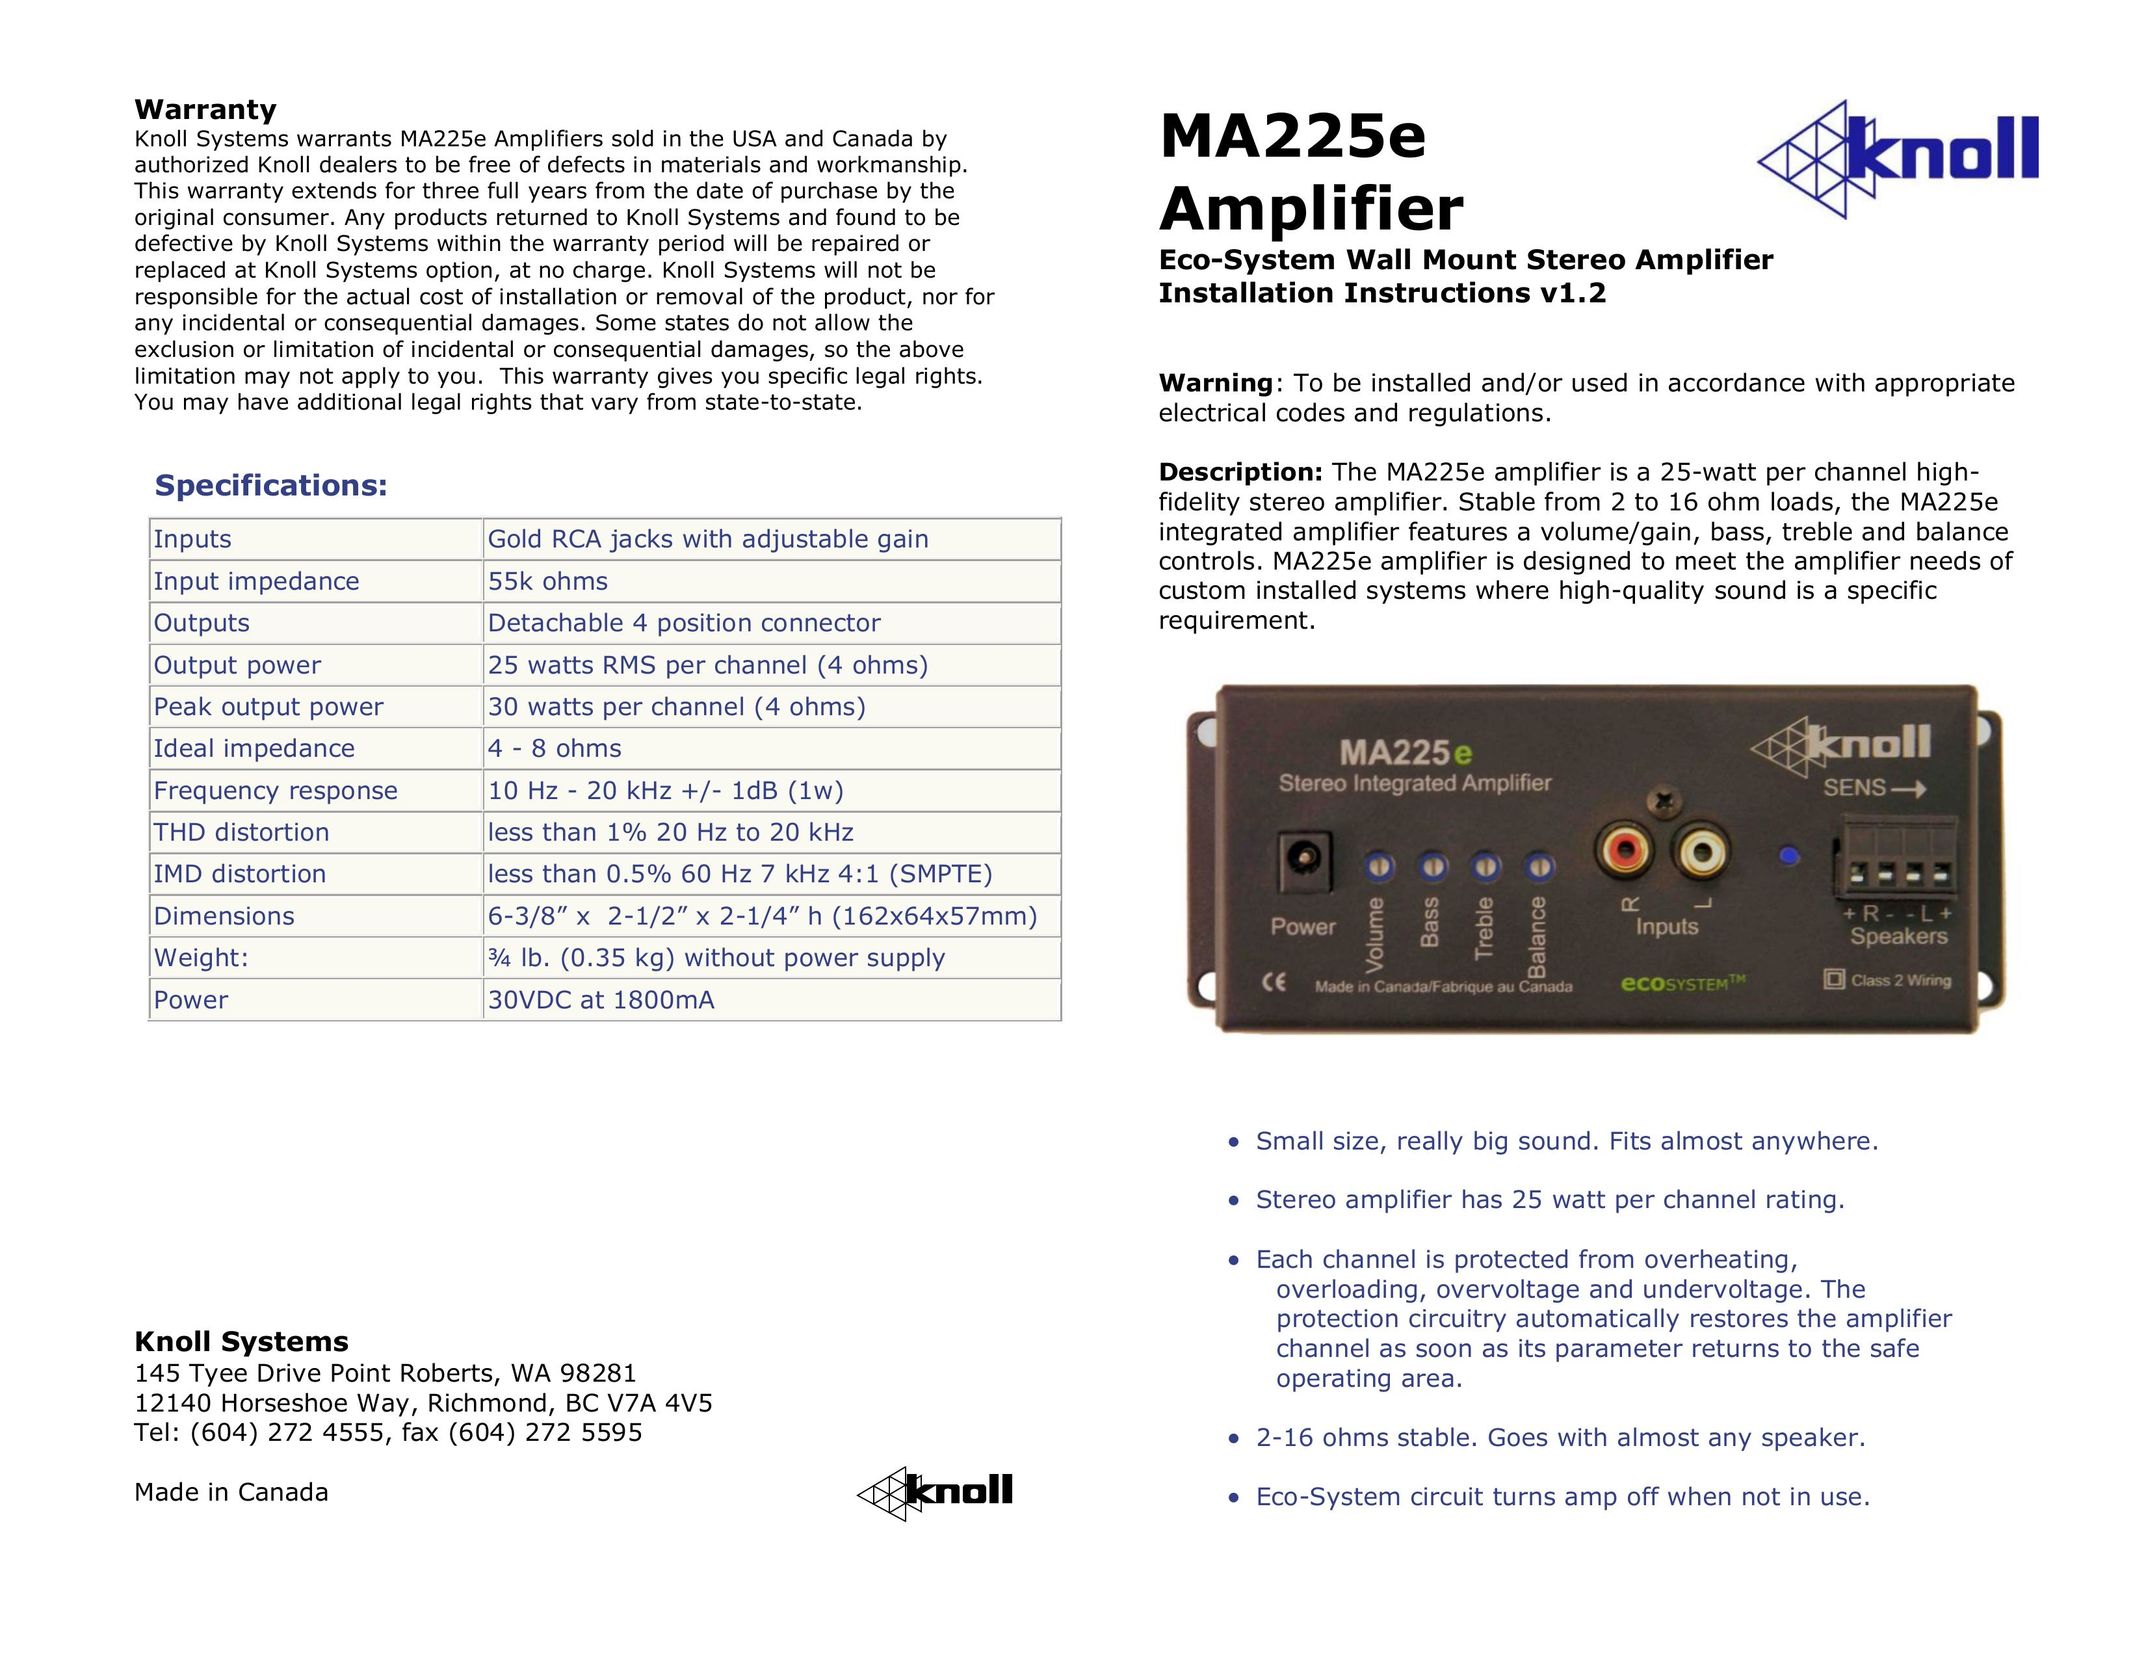 Knoll MA225E Stereo Amplifier User Manual